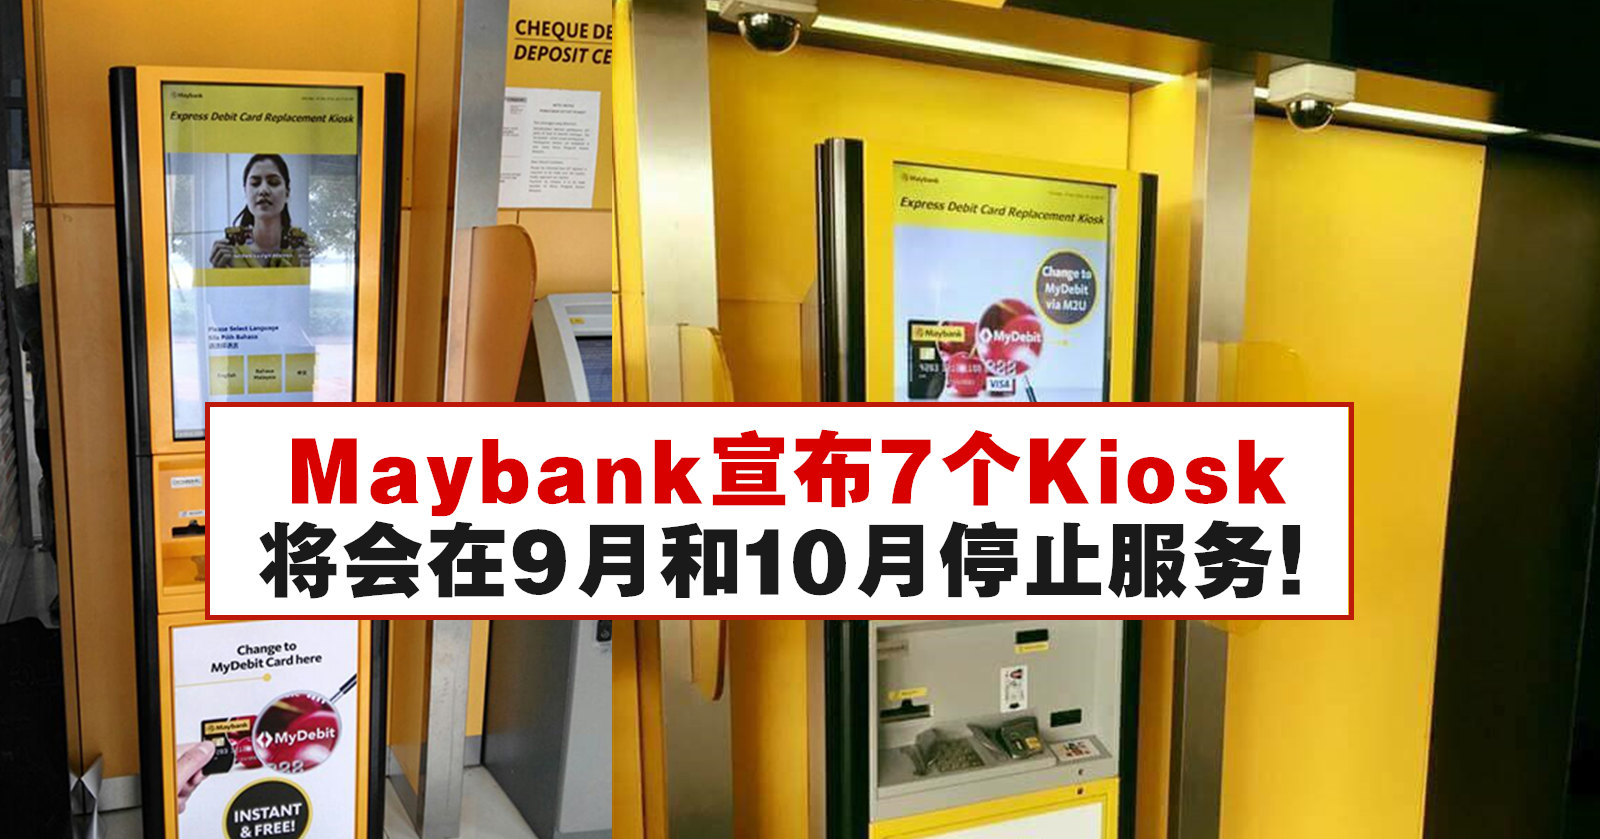 Kiosk replacement maybank card Maybank